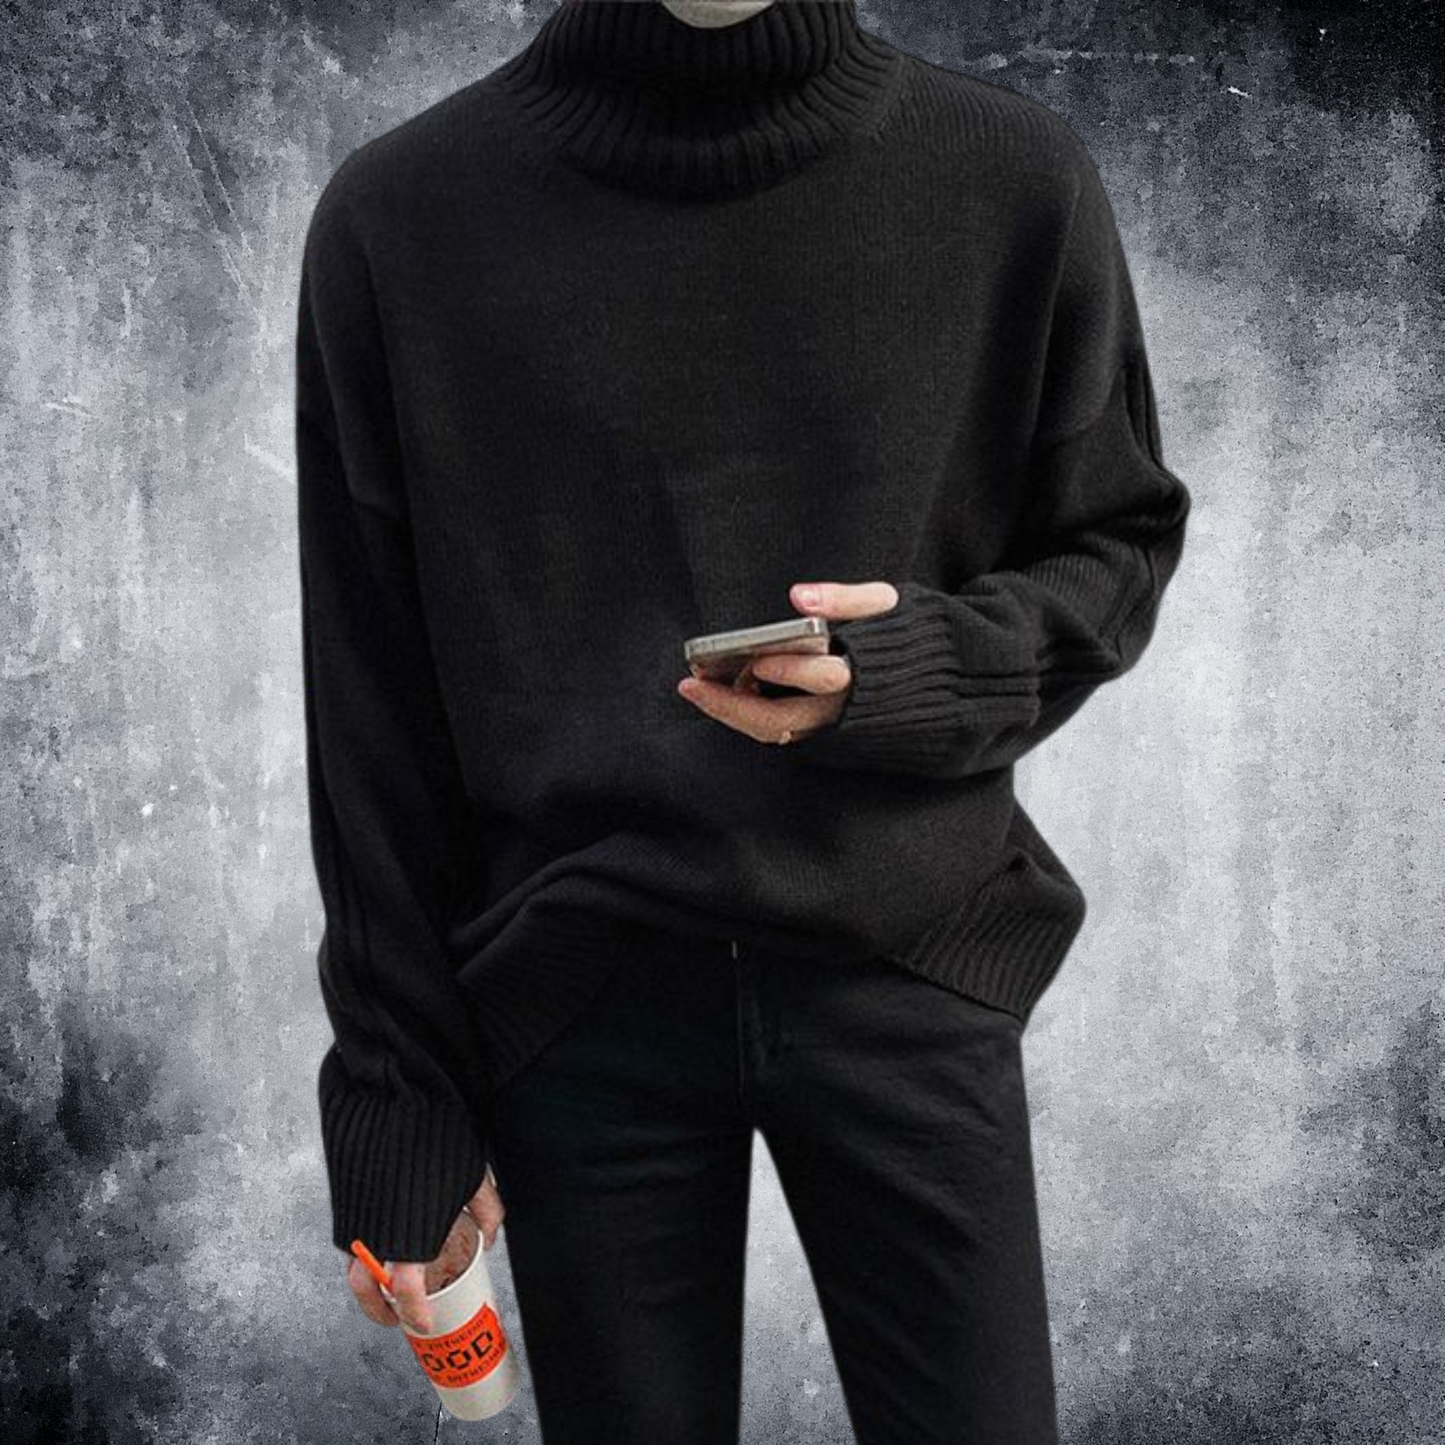 high neck black sweater EN421